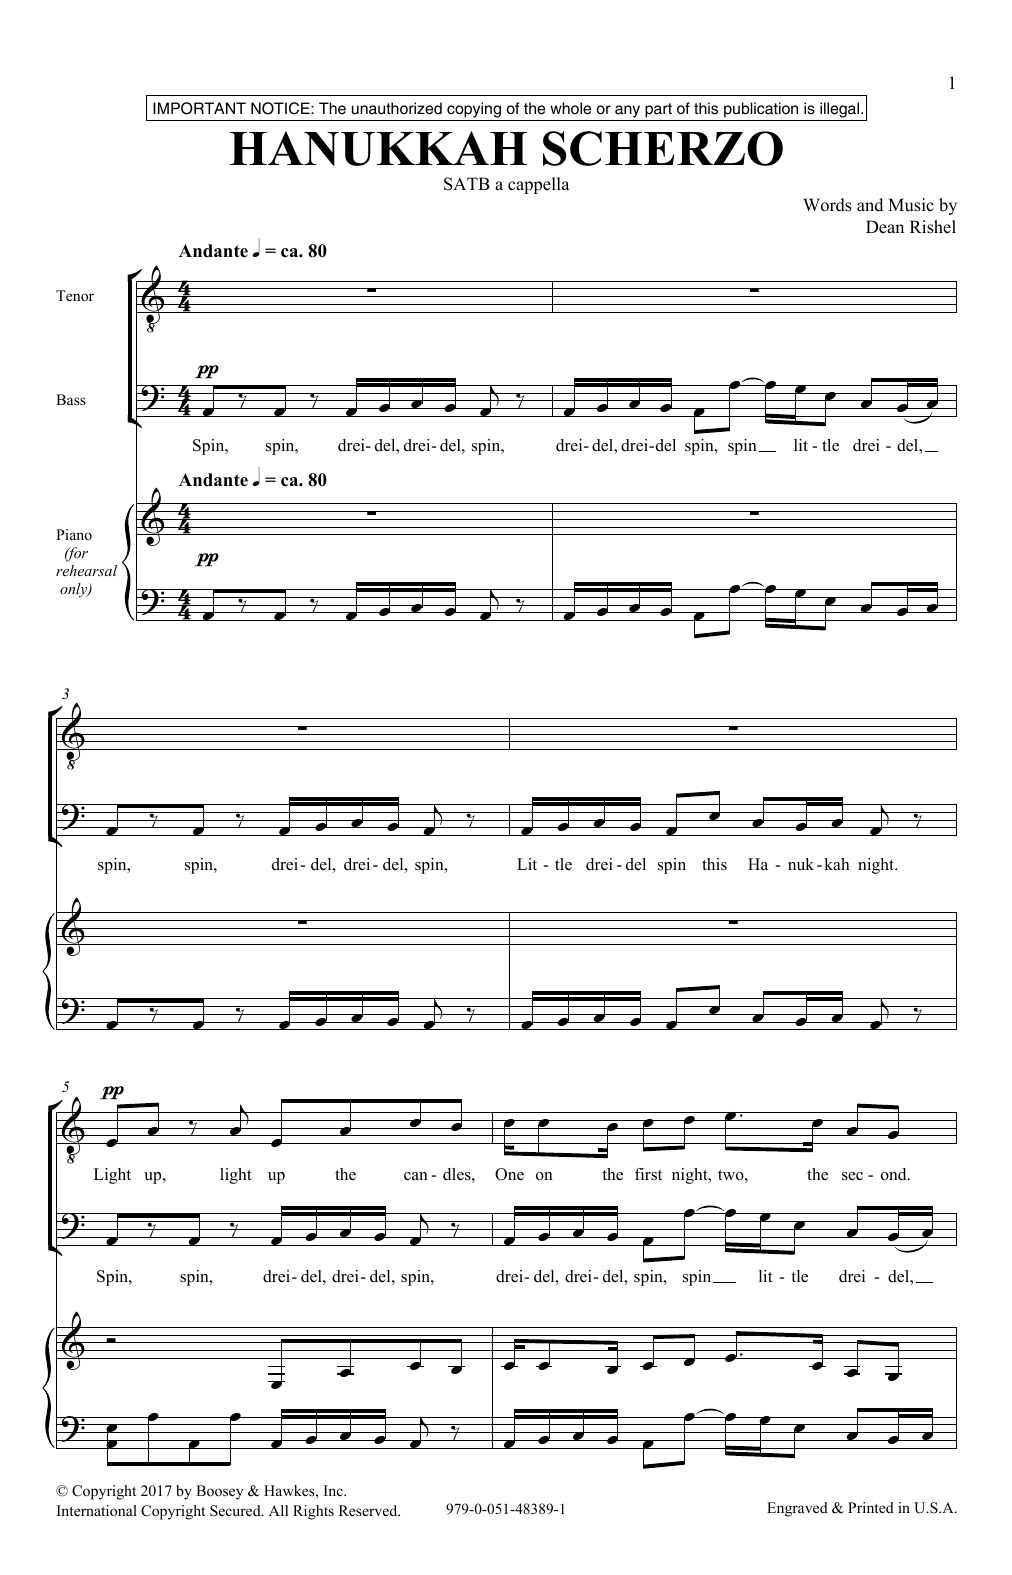 Dean Rishel Hanukkah Scherzo Sheet Music Notes & Chords for SATB - Download or Print PDF